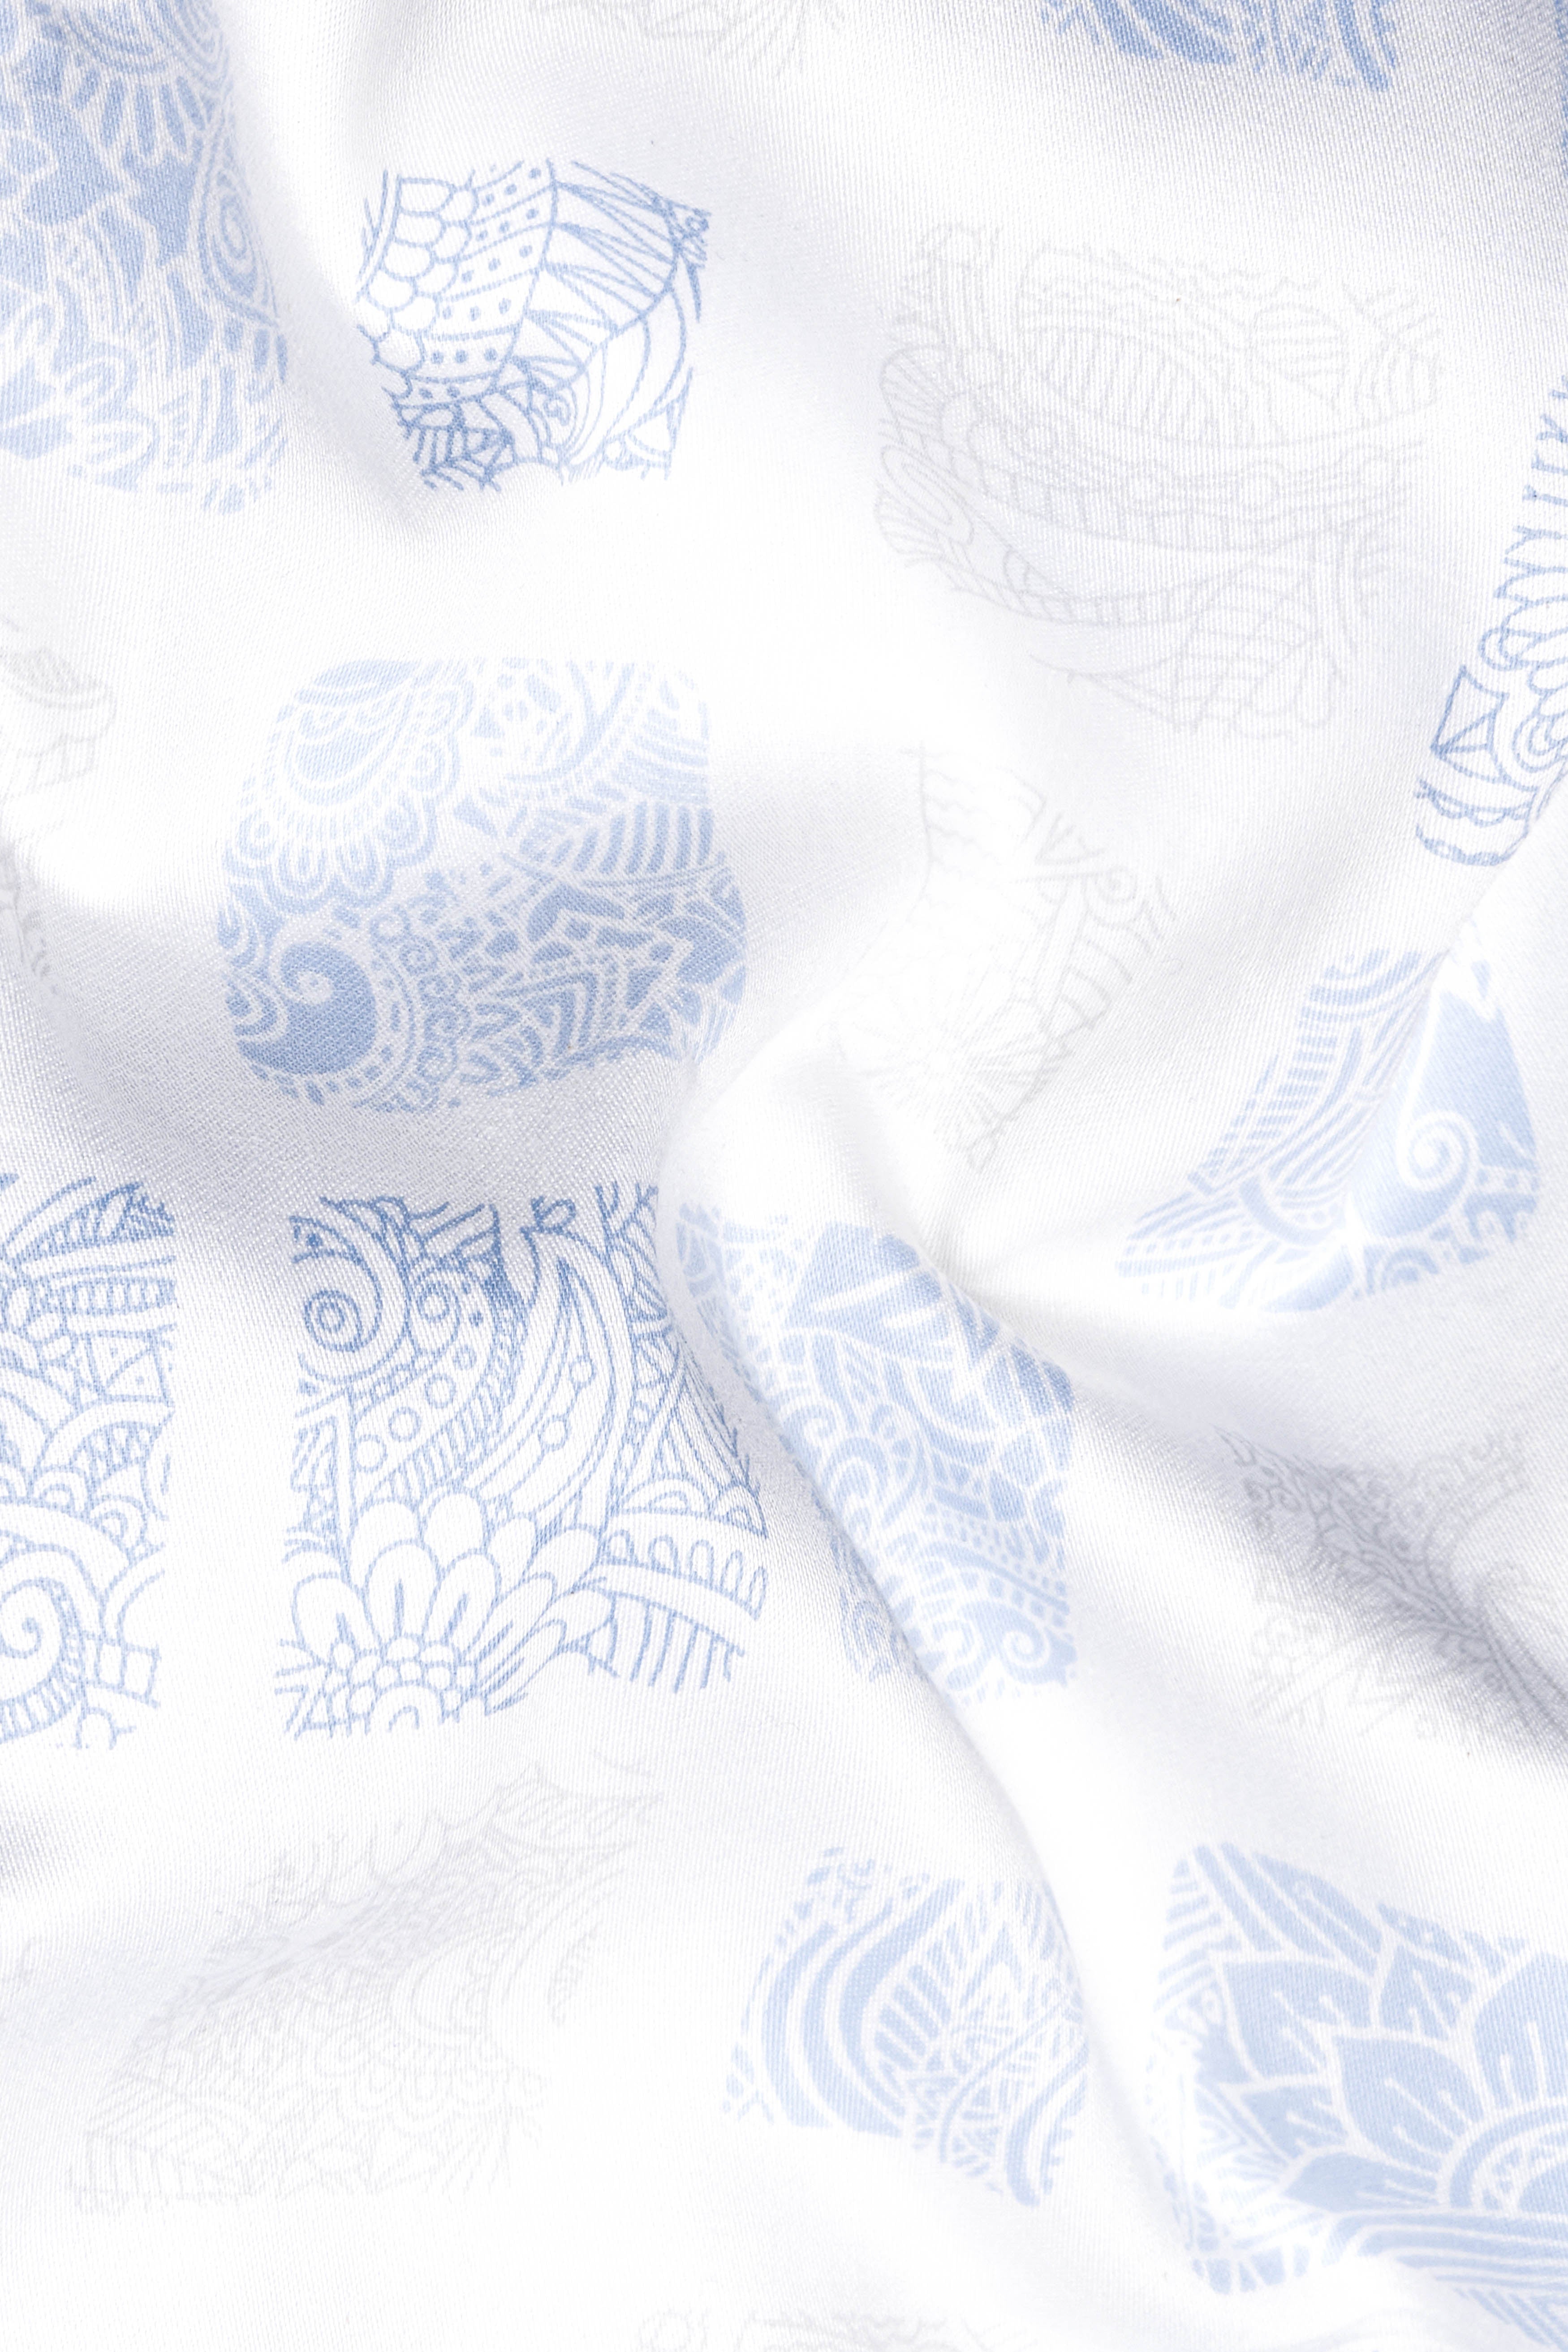 Bright White and Metallic Blue Printed Super Soft Premium Cotton Shirt